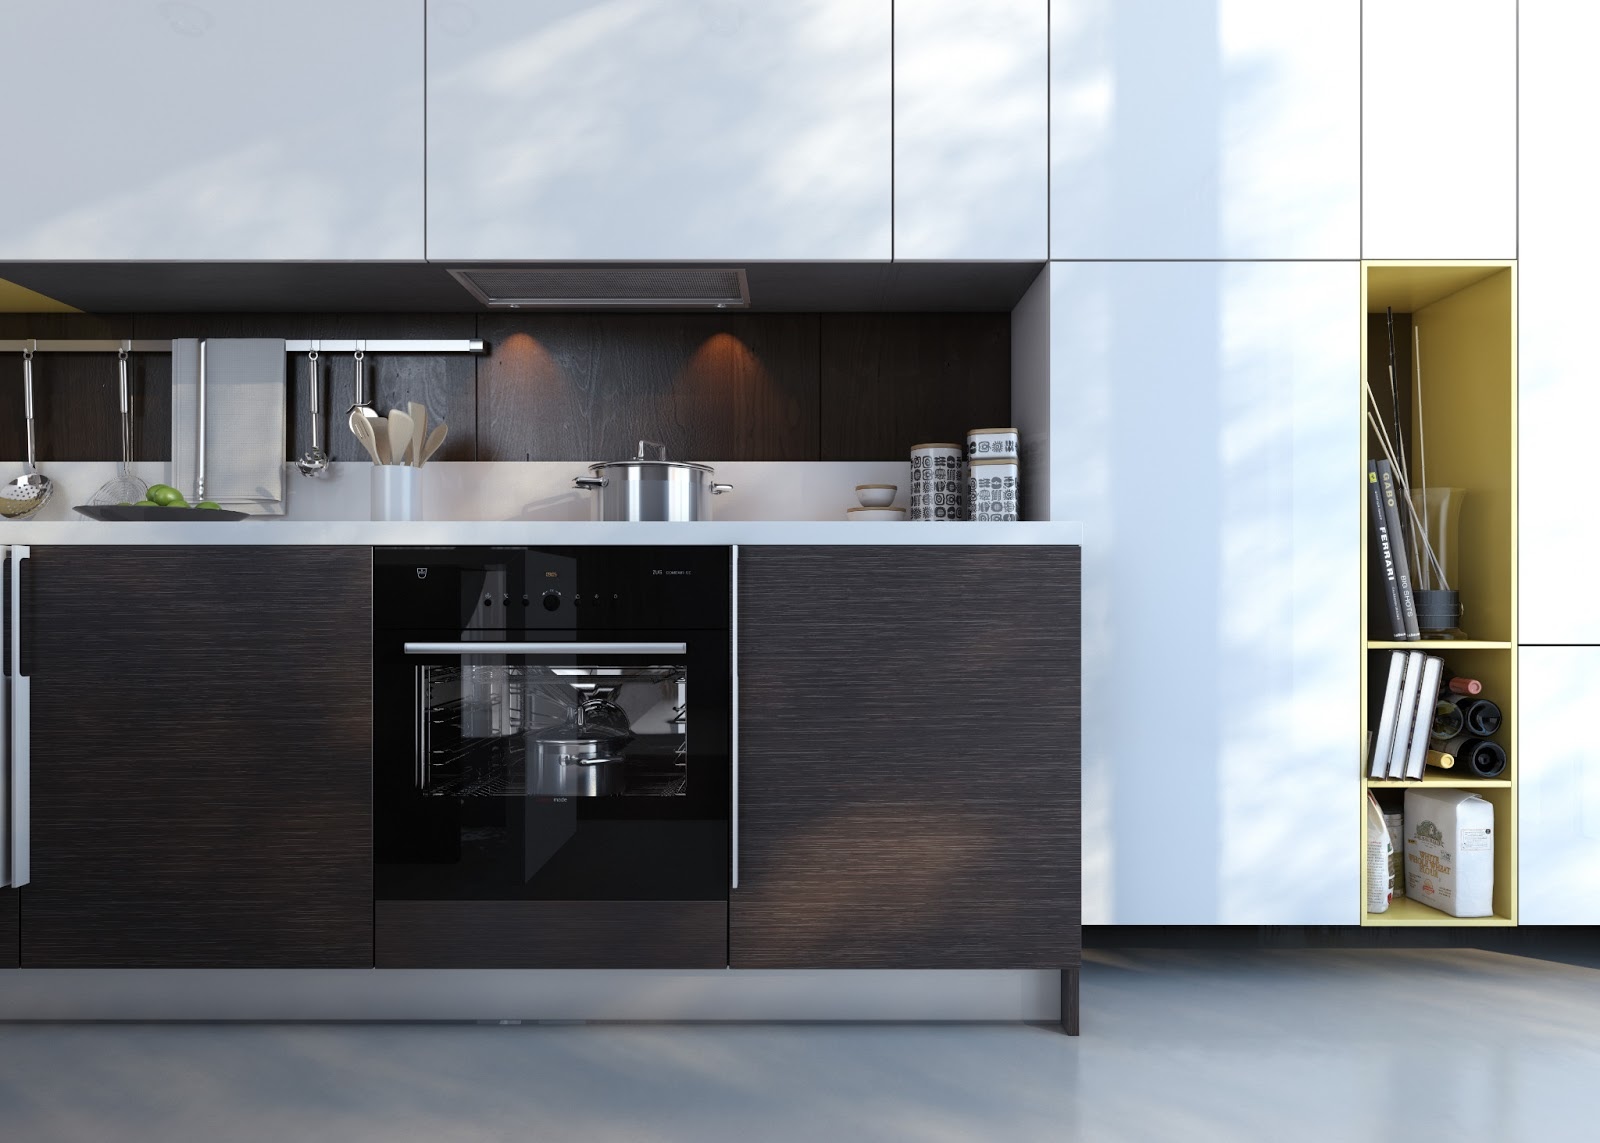 Minimalist kitchen design ideas